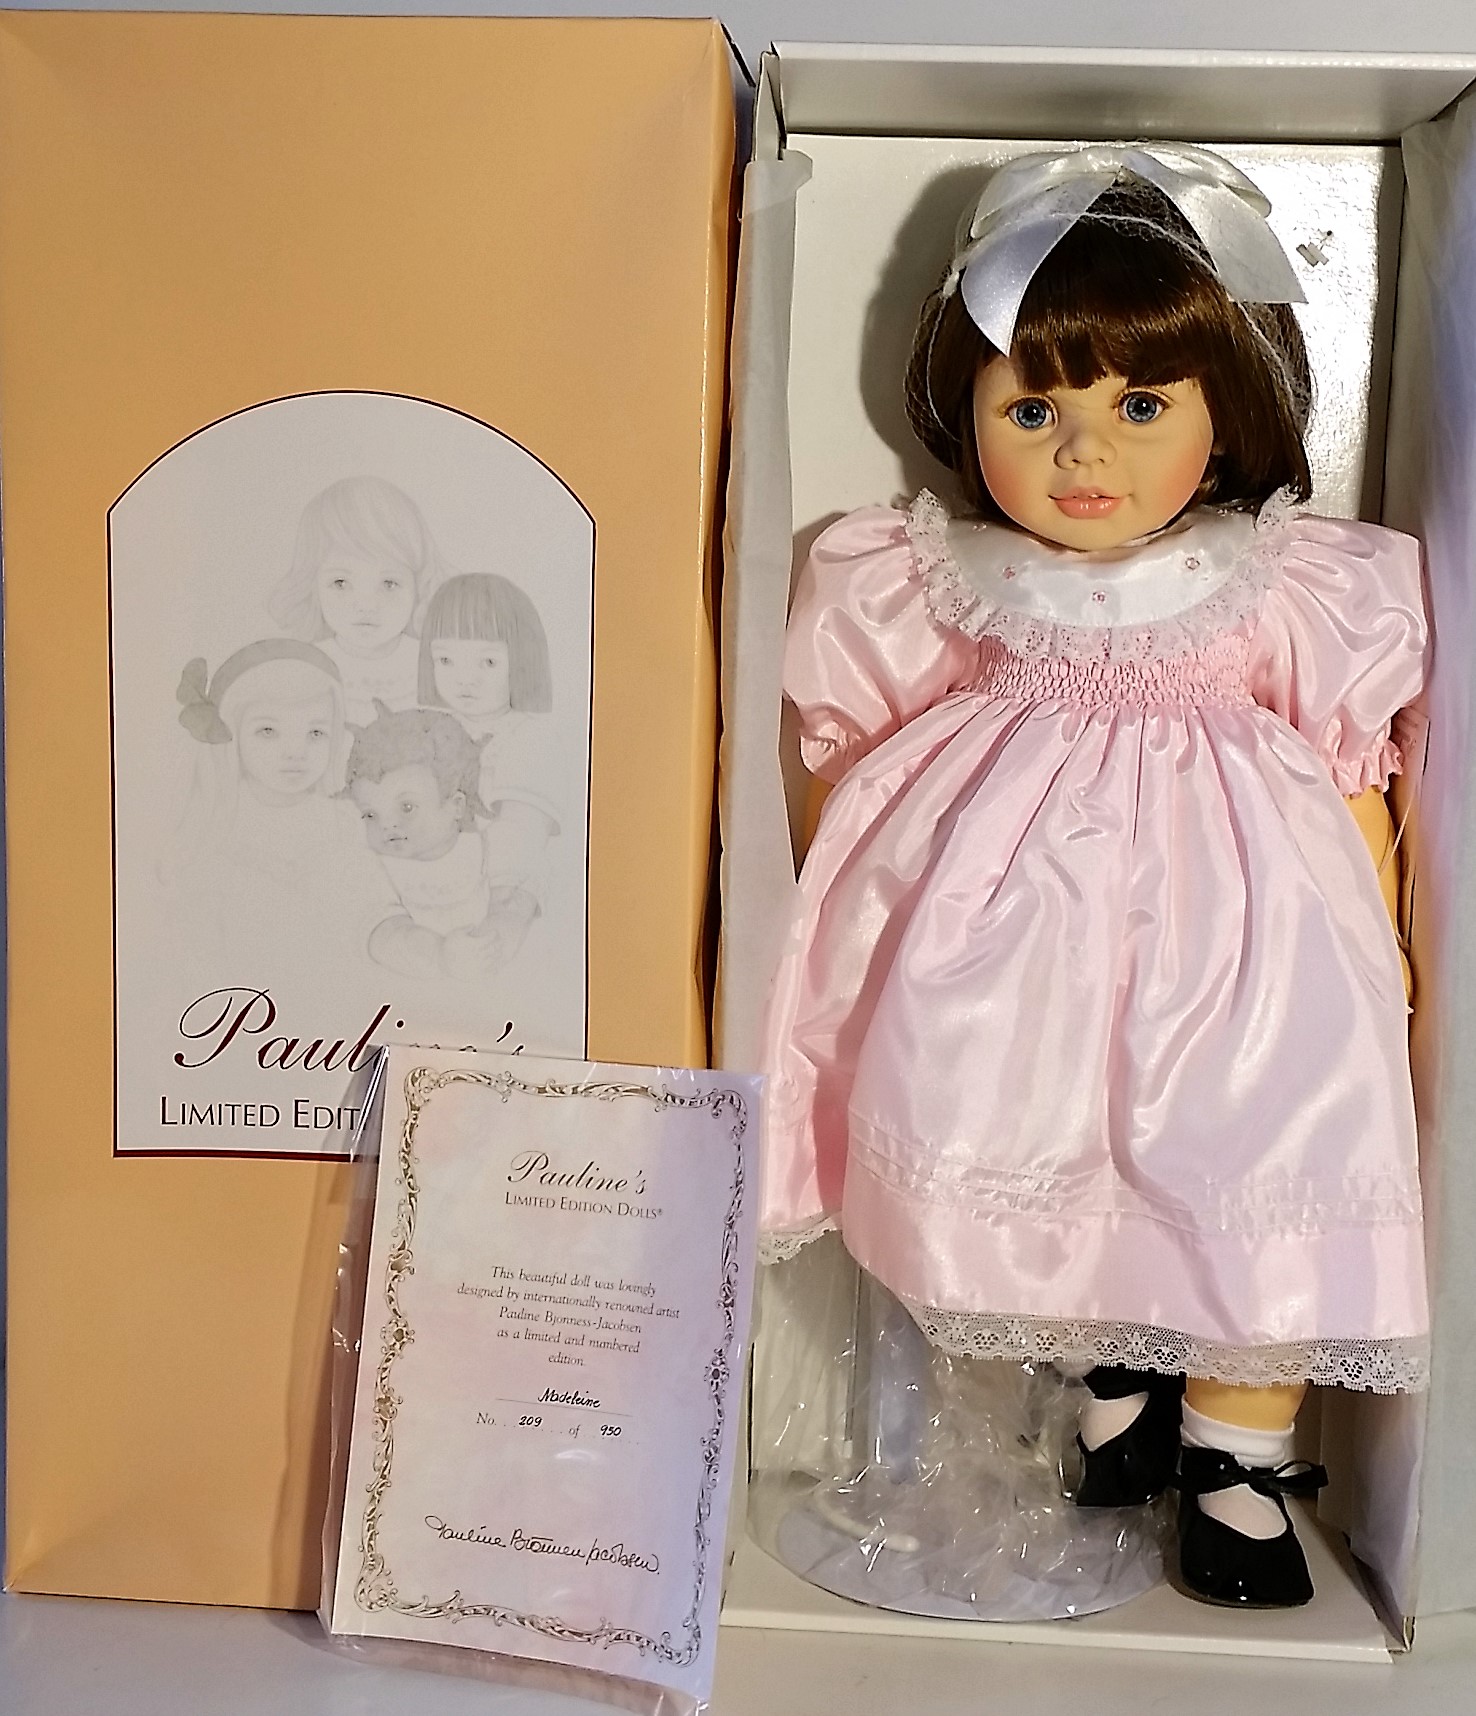 pauline's limited edition dolls